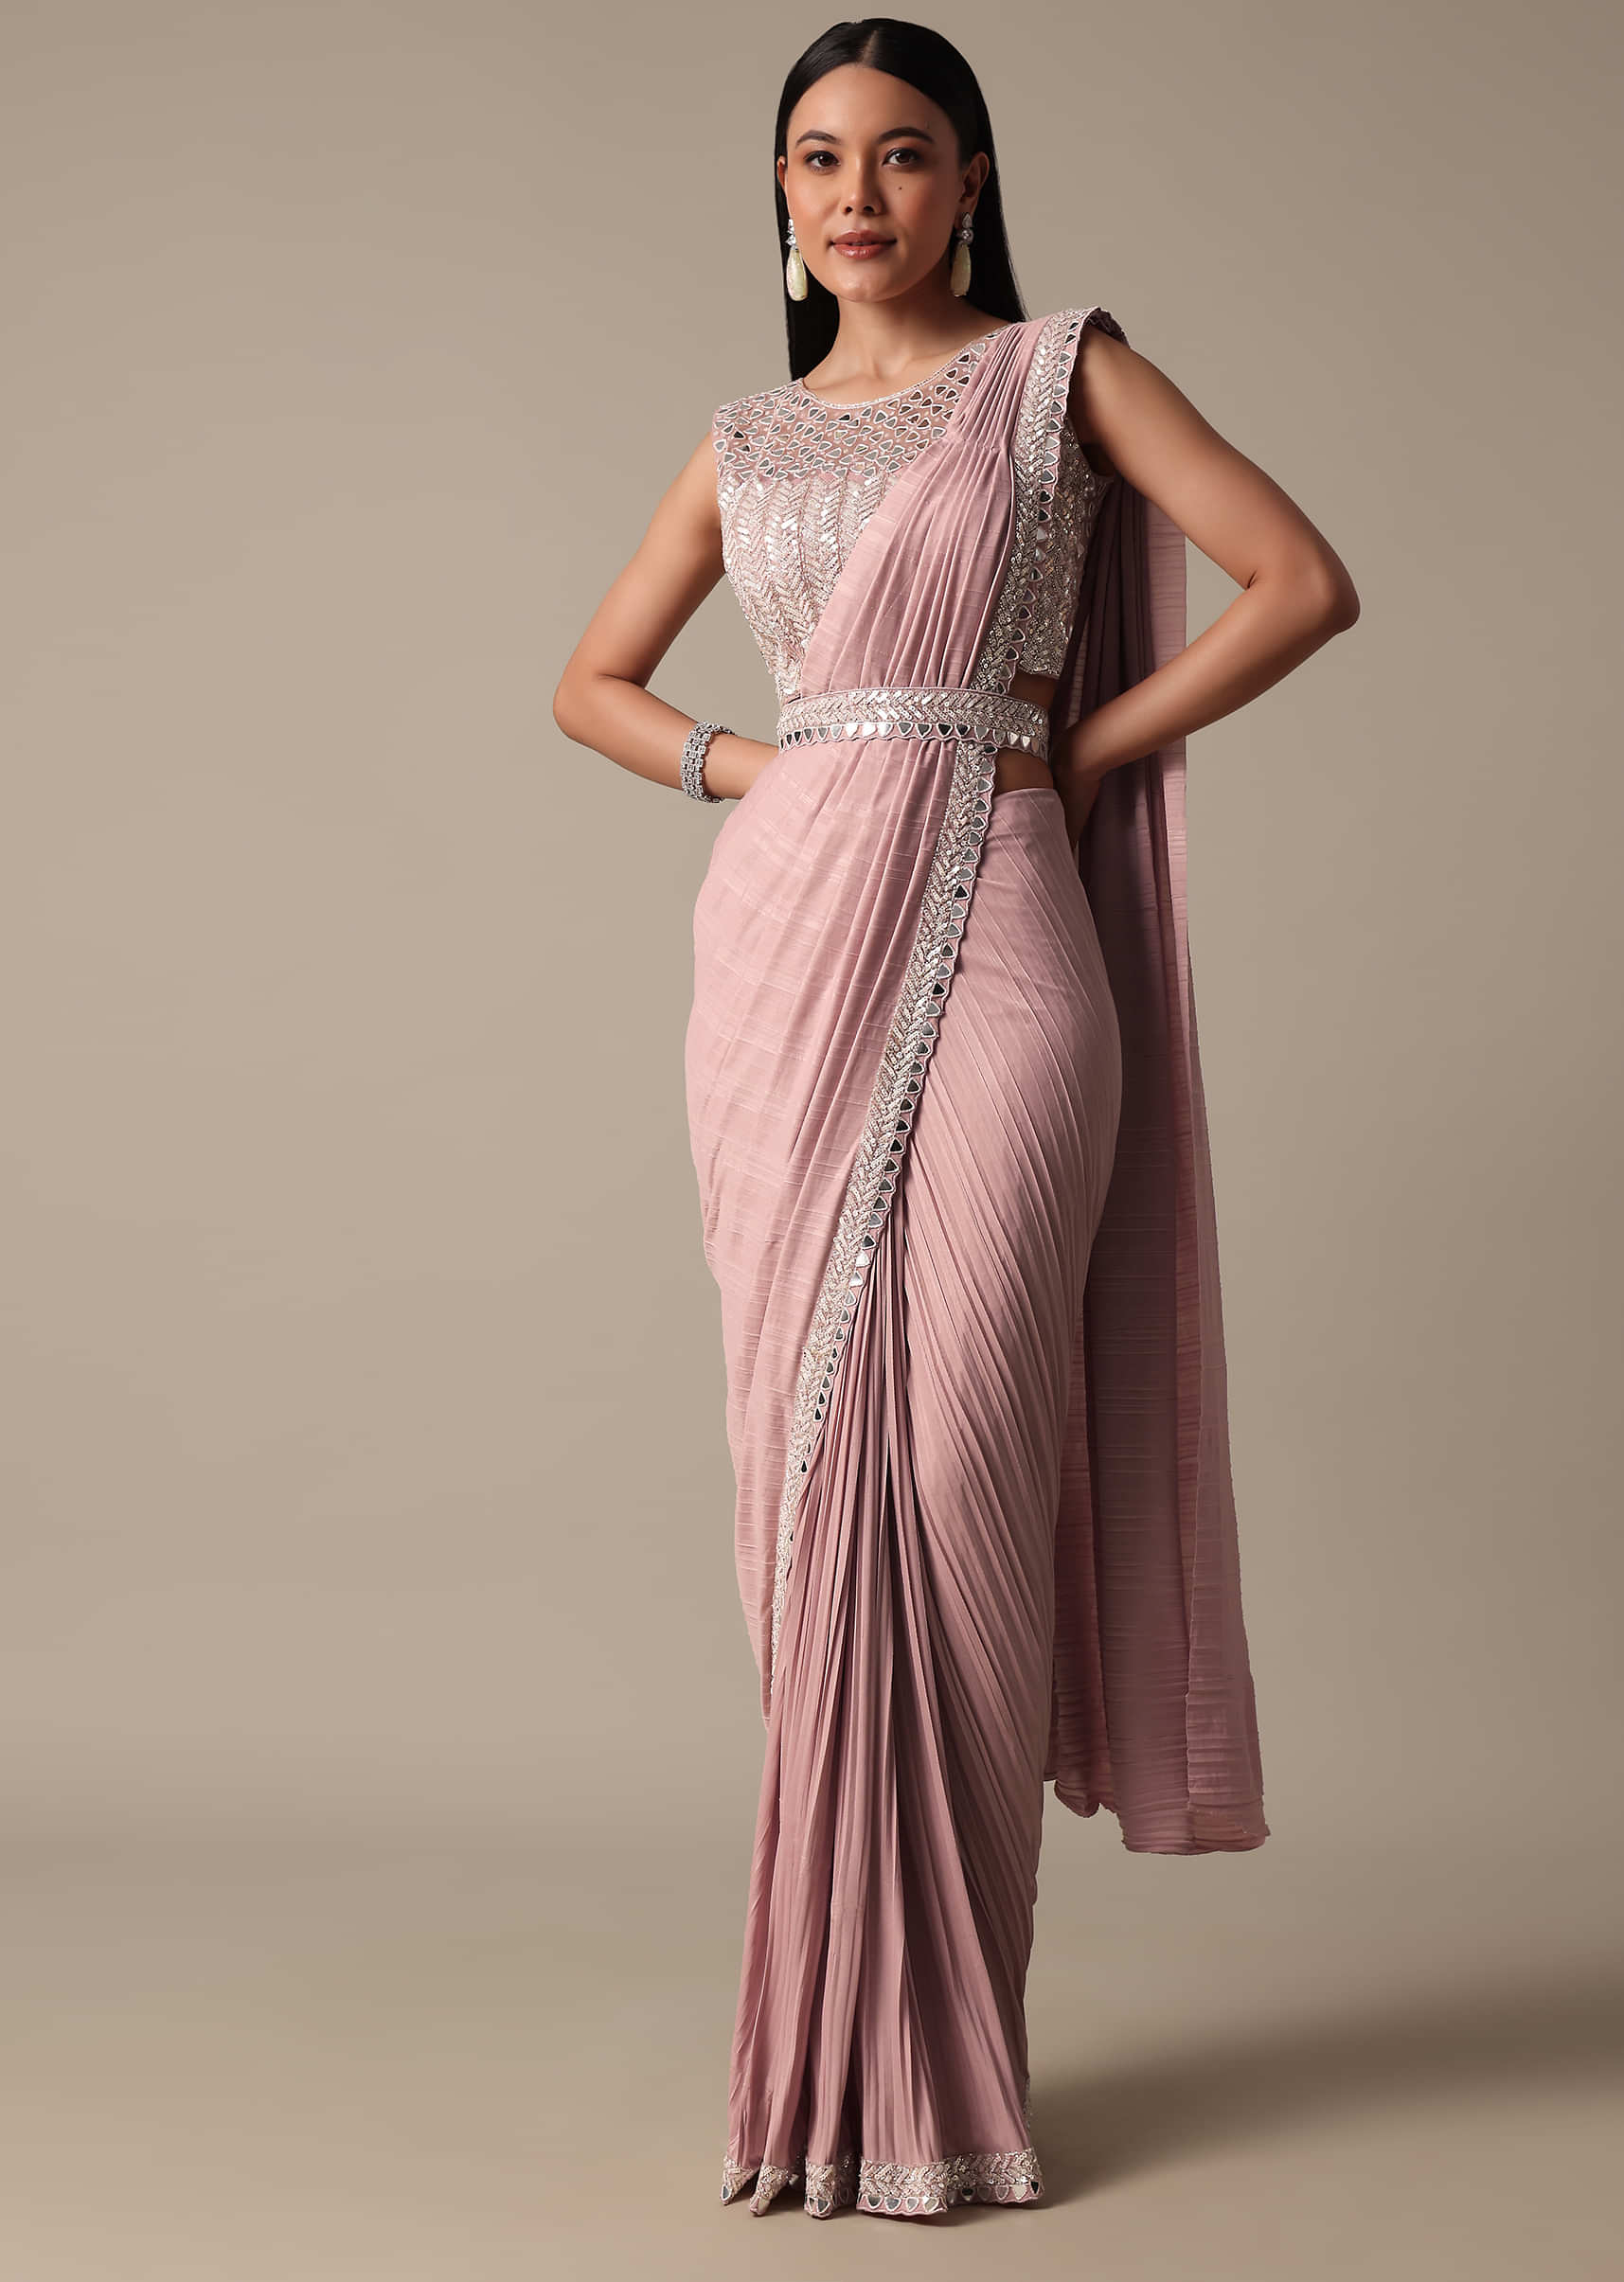 Readymade saree, ready to wear saree online ₹1800